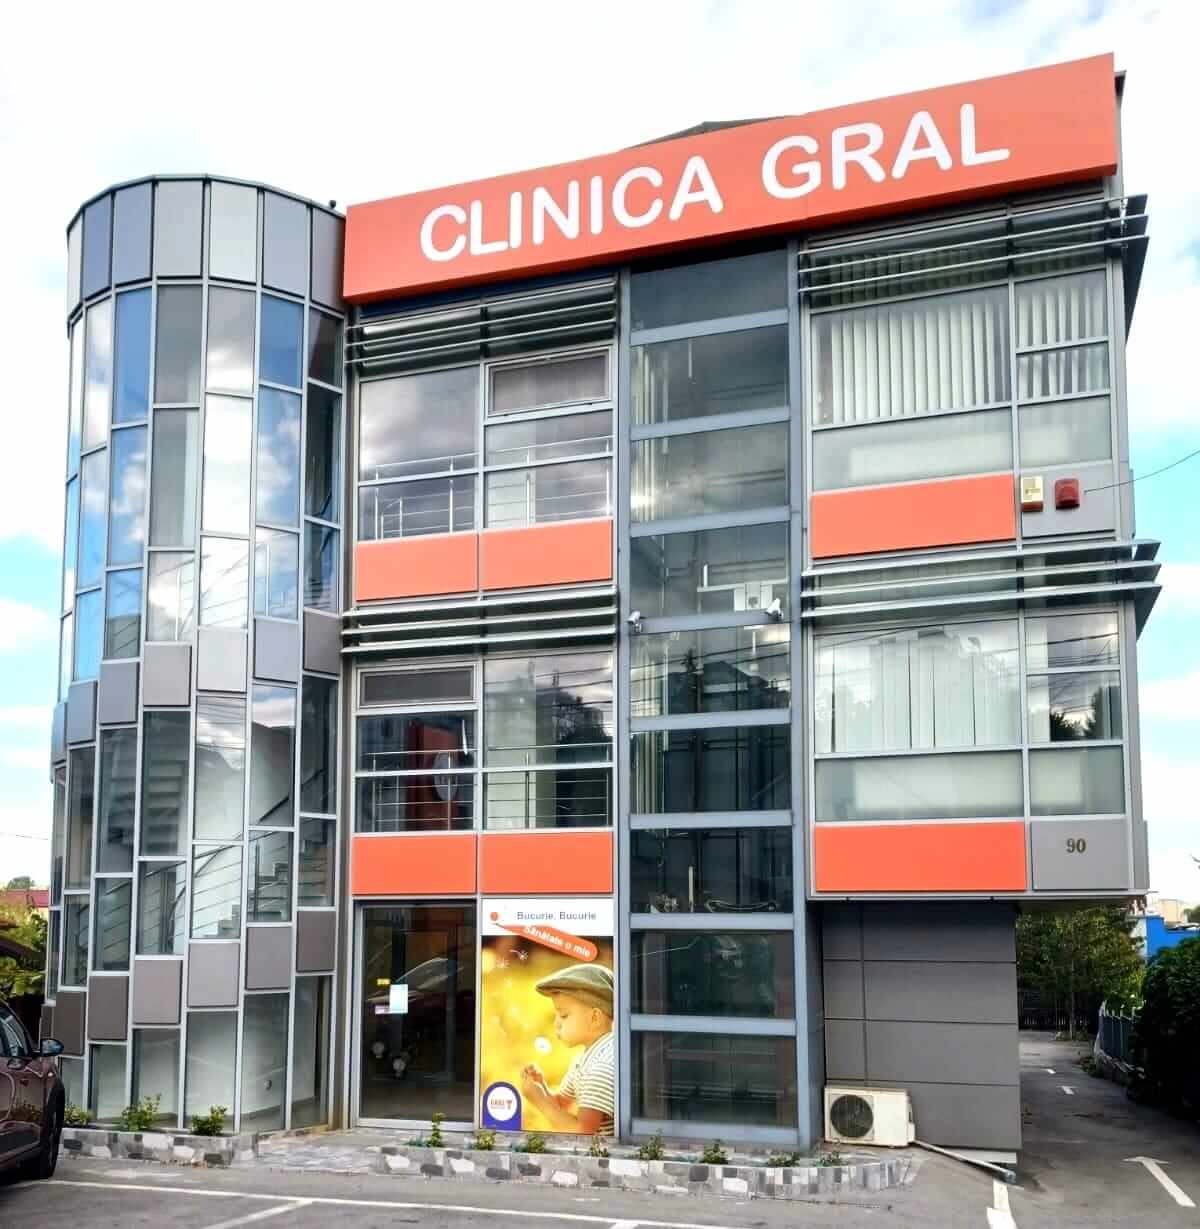 Thumbnail Clinica Gral Pitesti.jpg